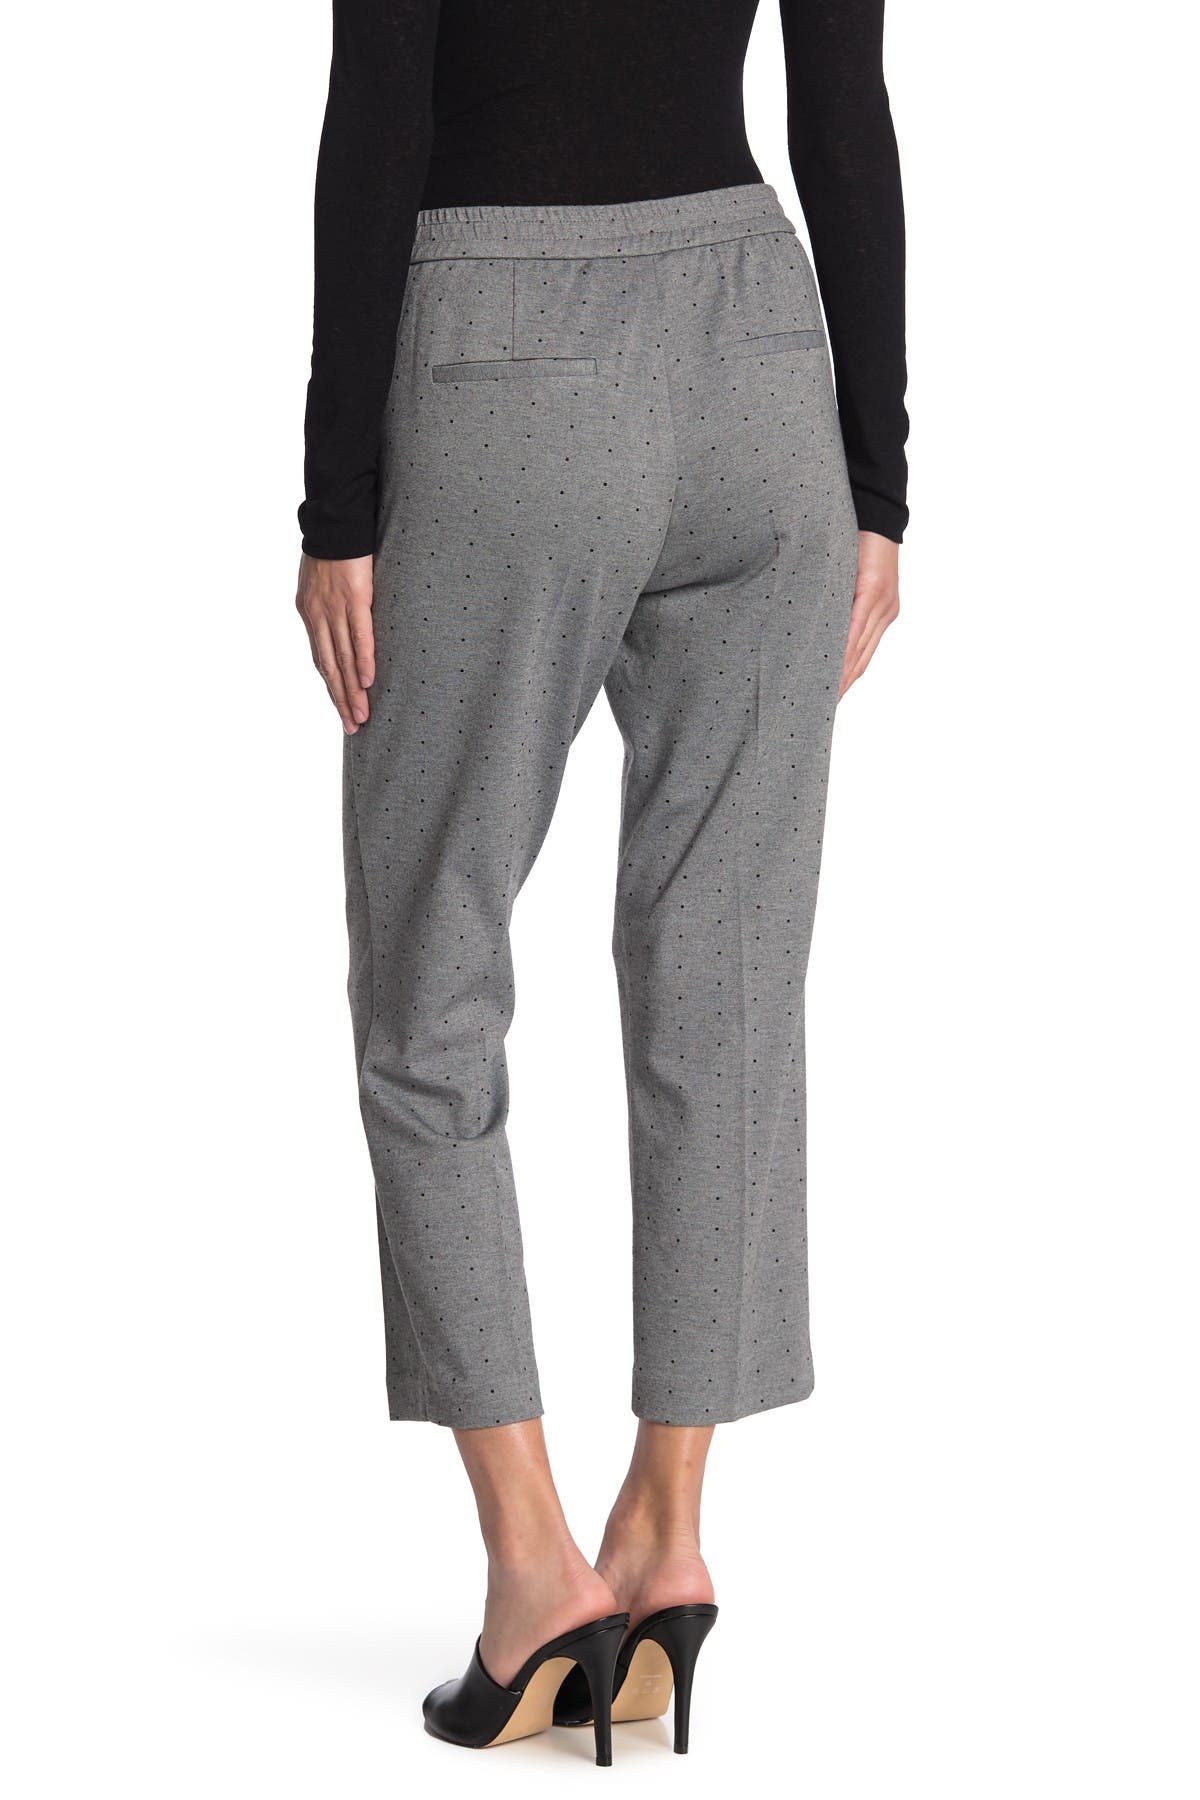 Amanda & Chelsea Dot Pull-on Crop Pants In Grey/blk